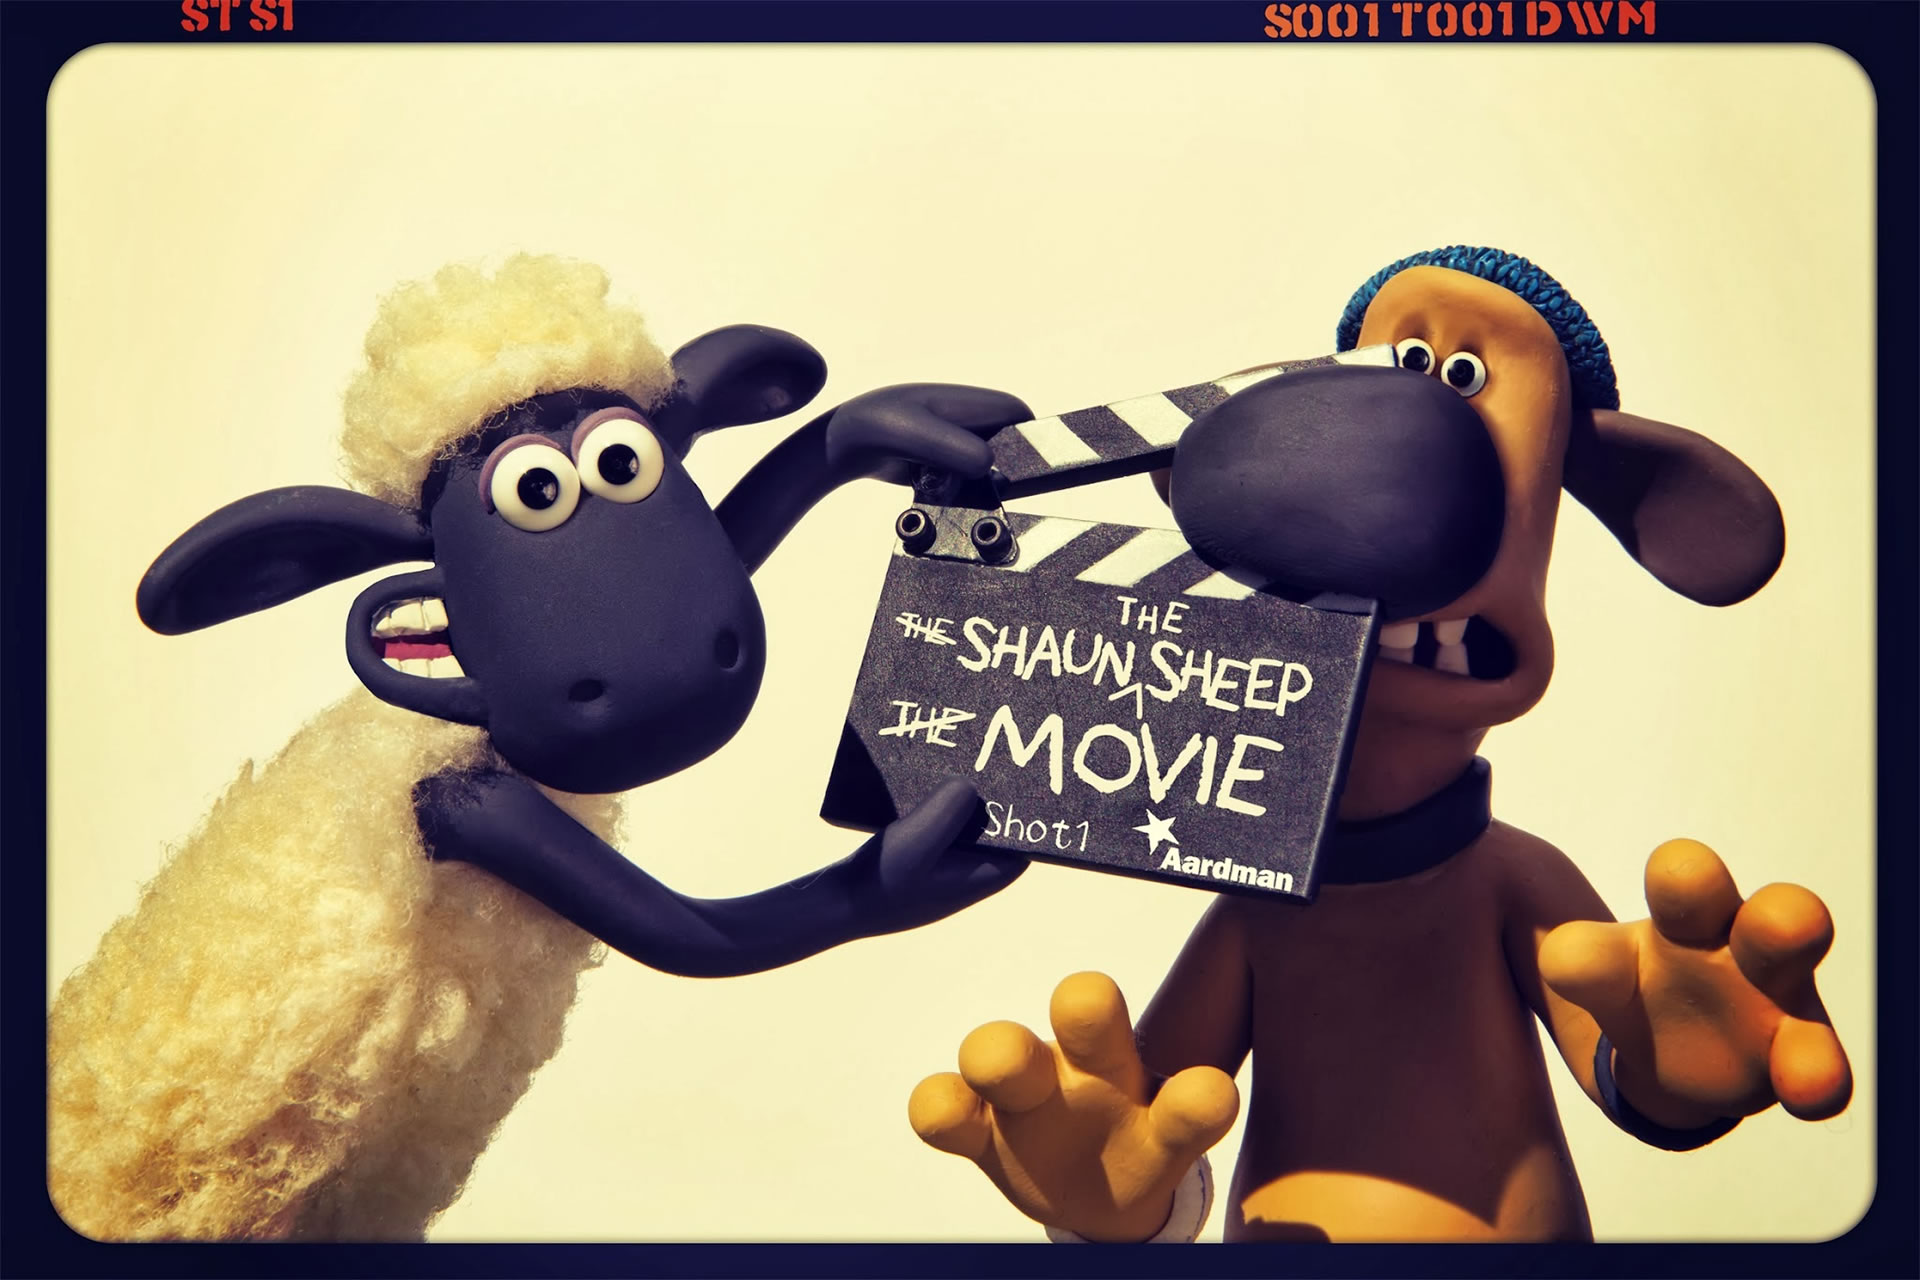 download wallpaper: Shaun the sheep movie wallpaper